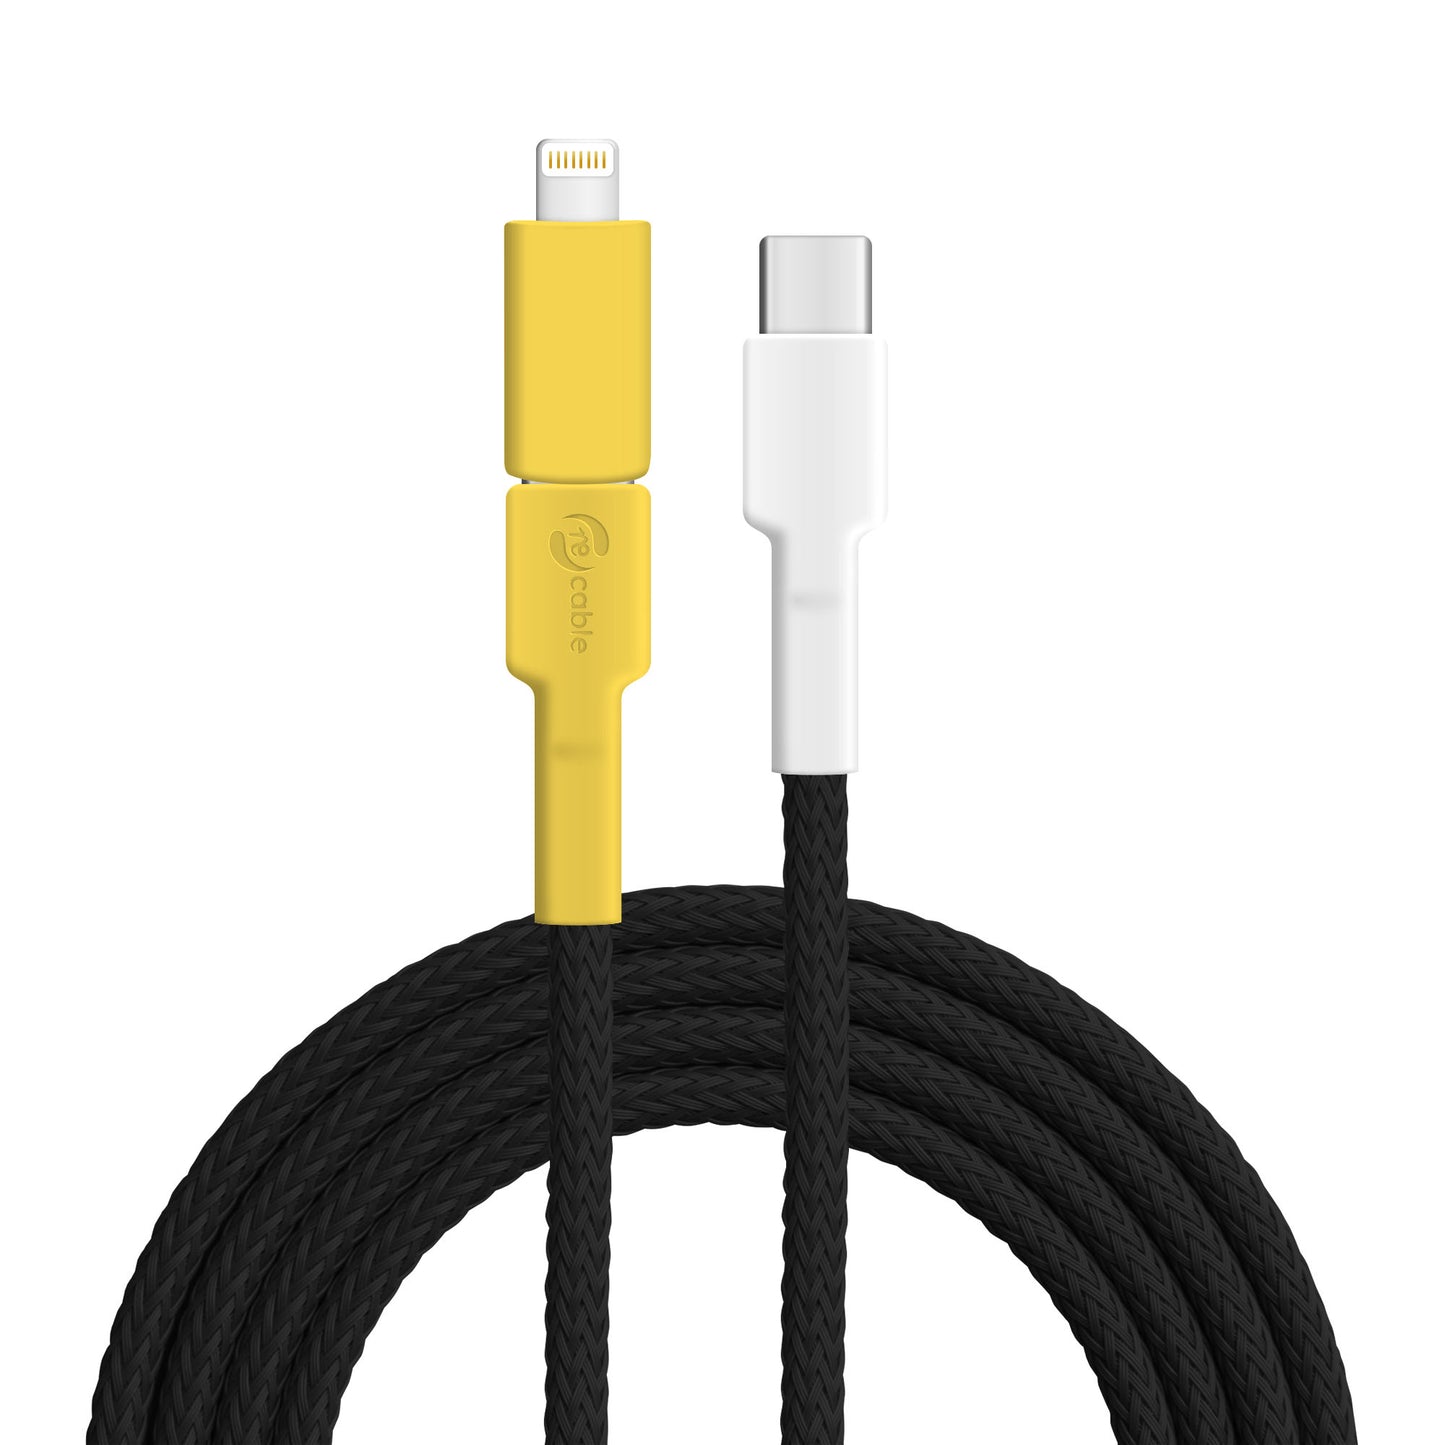 USB-Kabel, Design: Goldschnäpper, Anschlüsse: USB C auf USB C mit Lightning Adapter (verbunden)